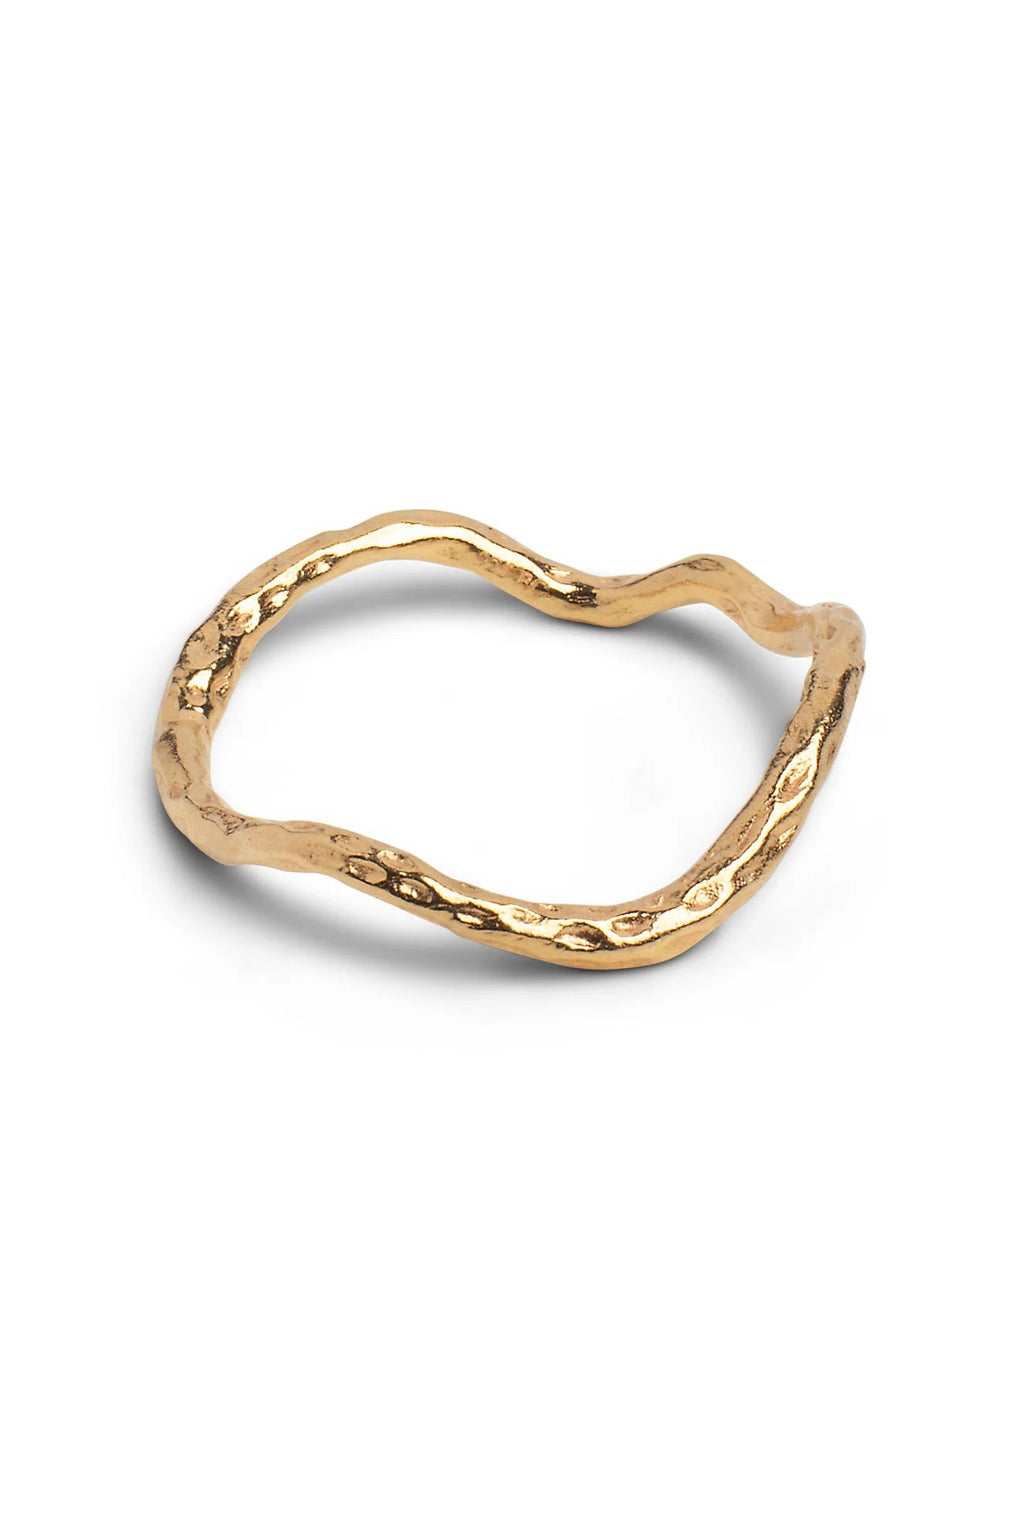 AW23 Enamel Copenhagen Sway Ring in Gold - The Mercantile London